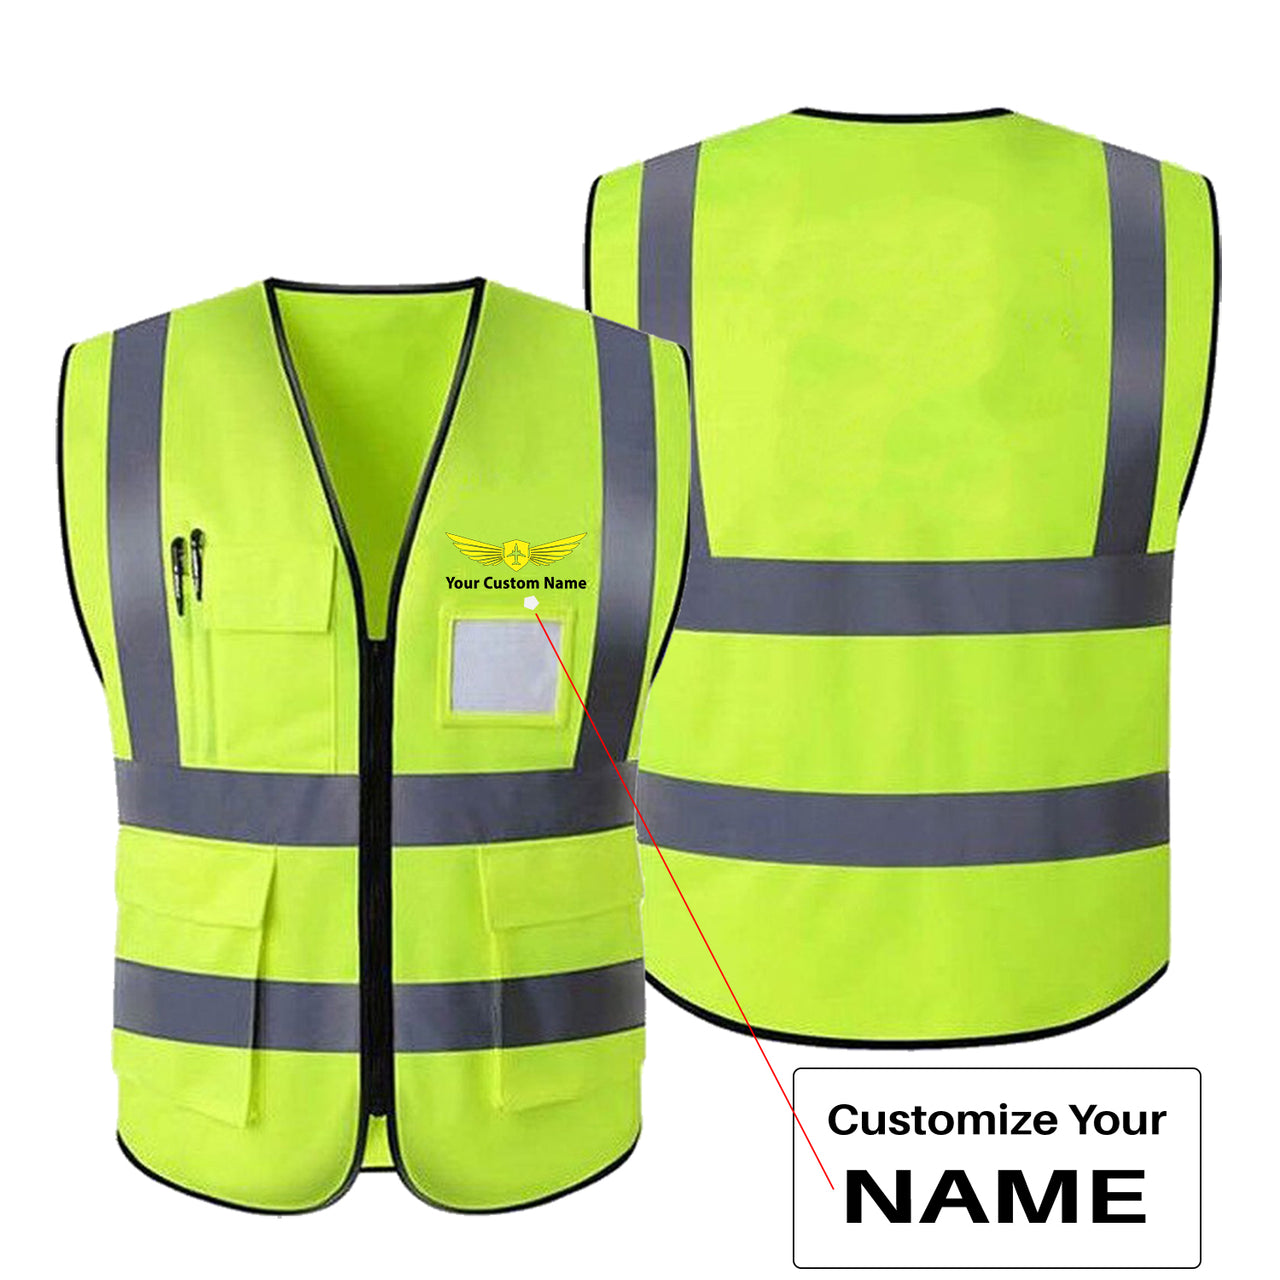 Custom Name with Badge 2 Designed Reflective Vests